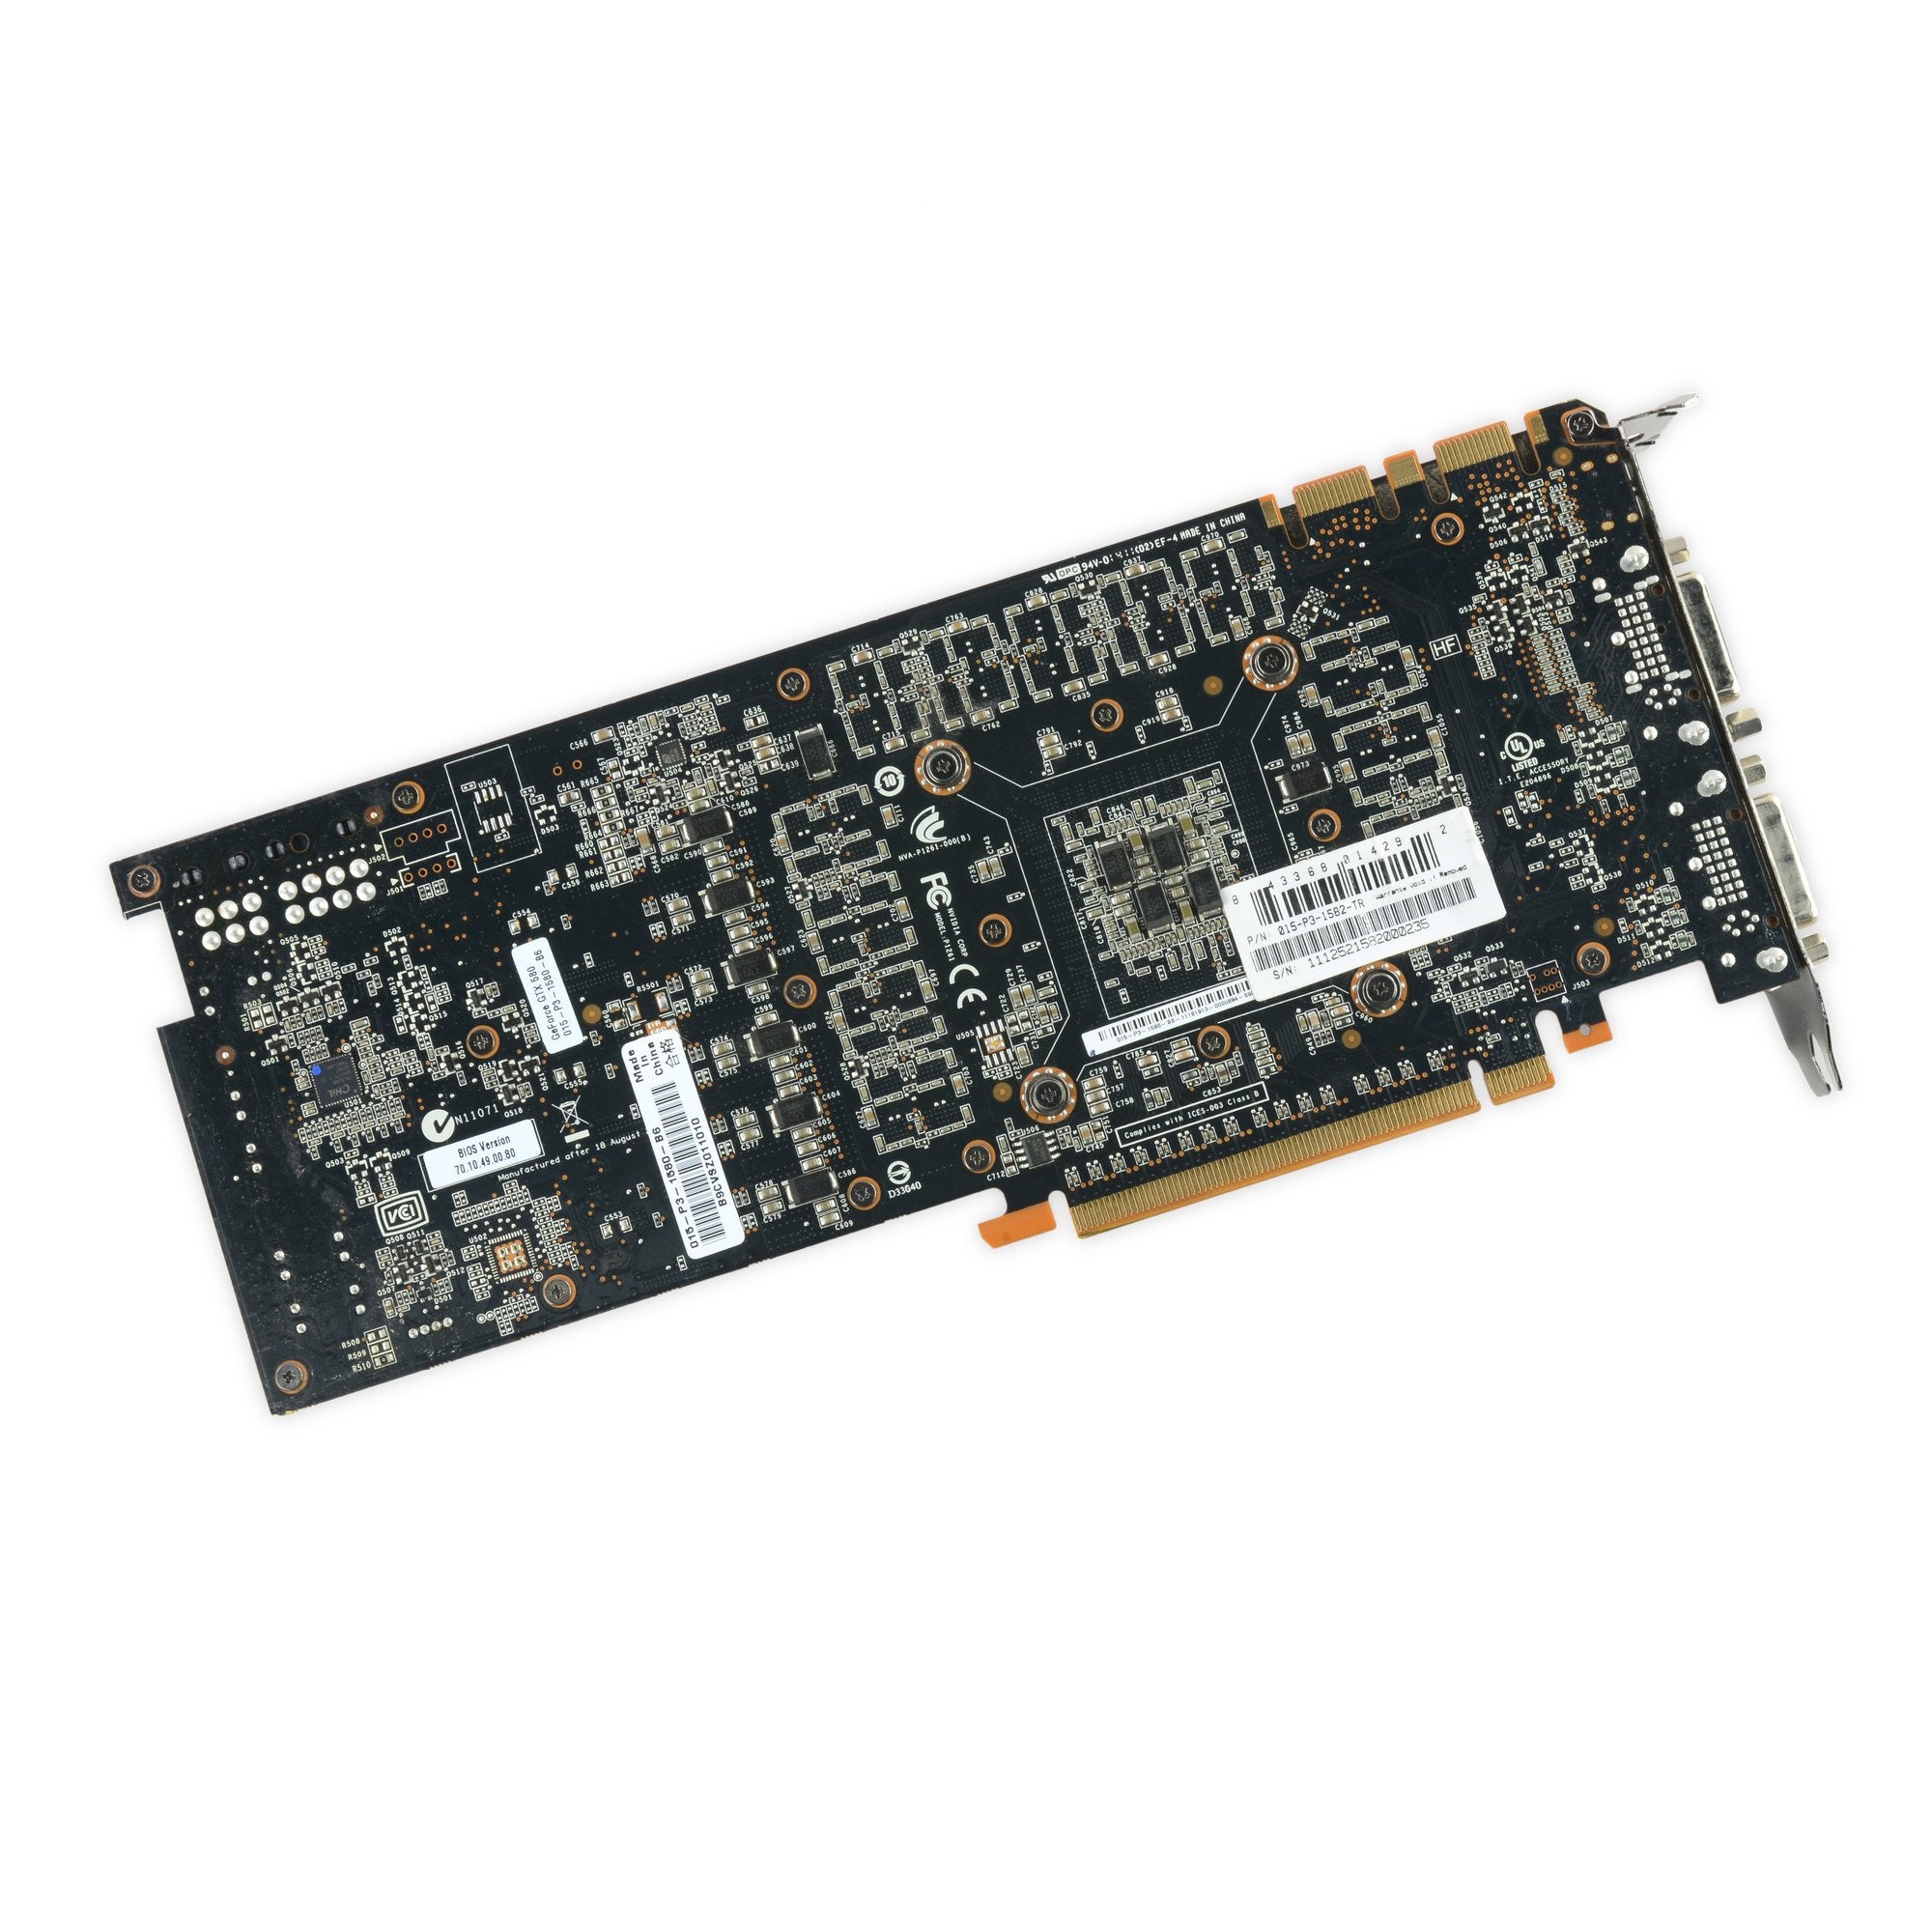 GeForce GTX 580 Graphics Card